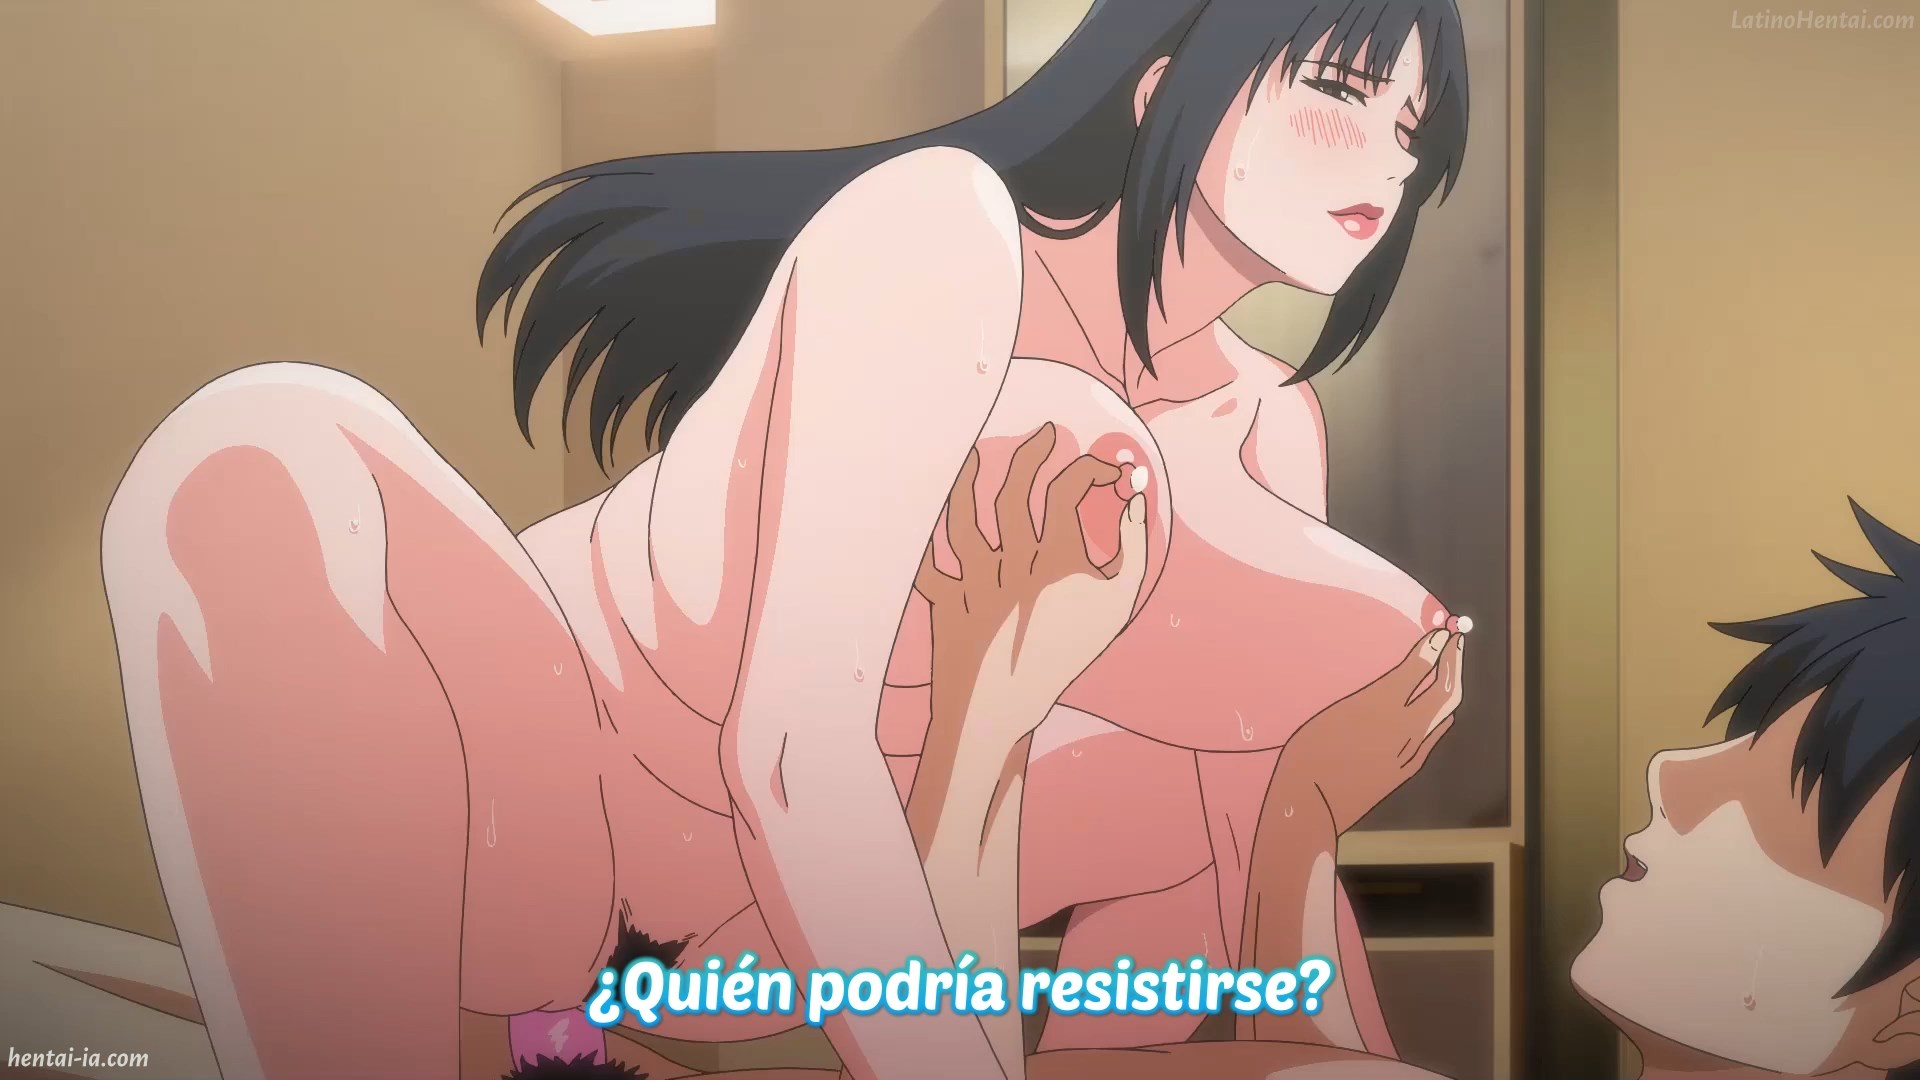 Series hentai sub en español